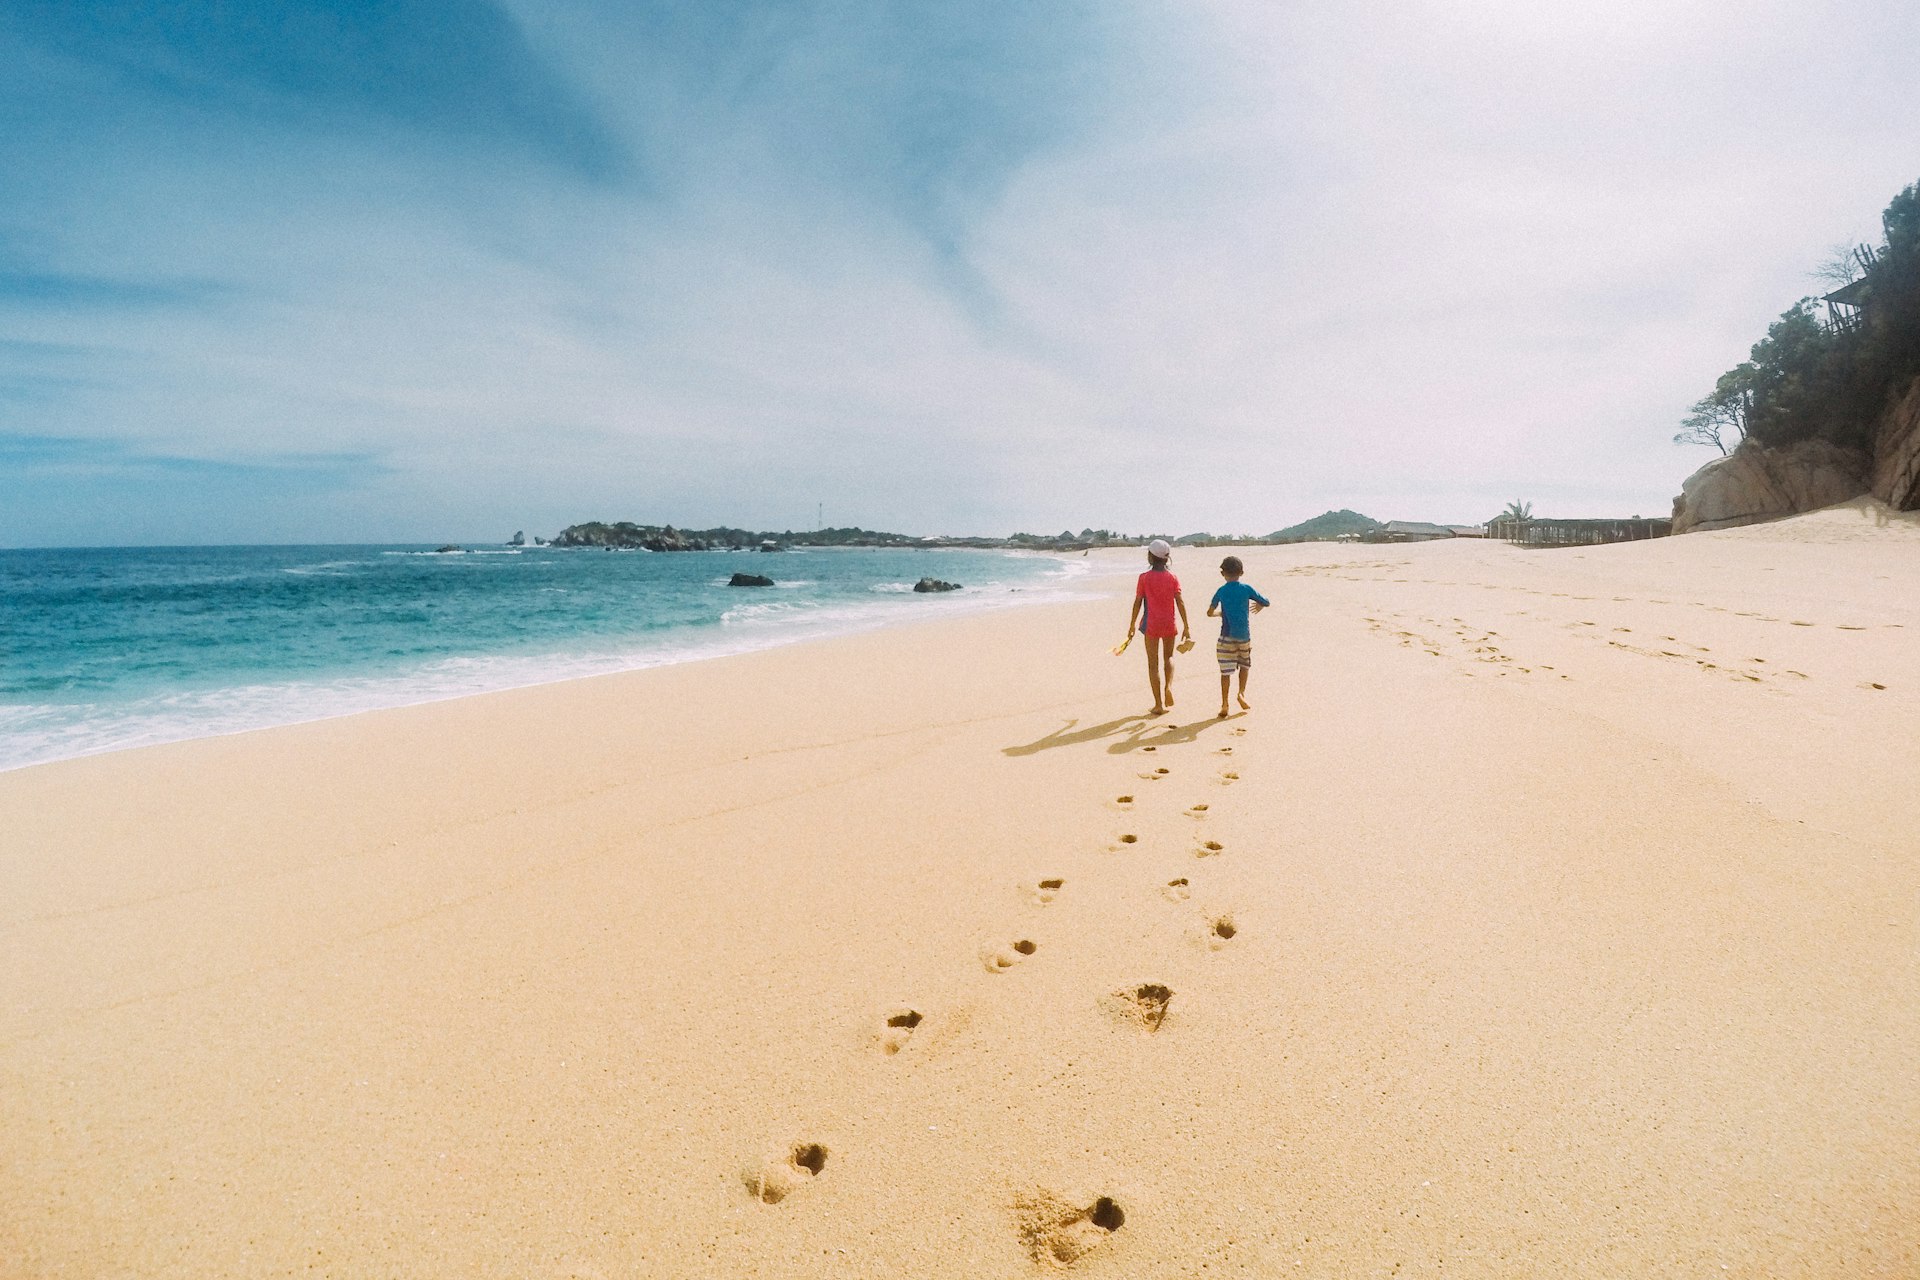 Siblings walk a Deserted Oaxaca Beach in Mexico